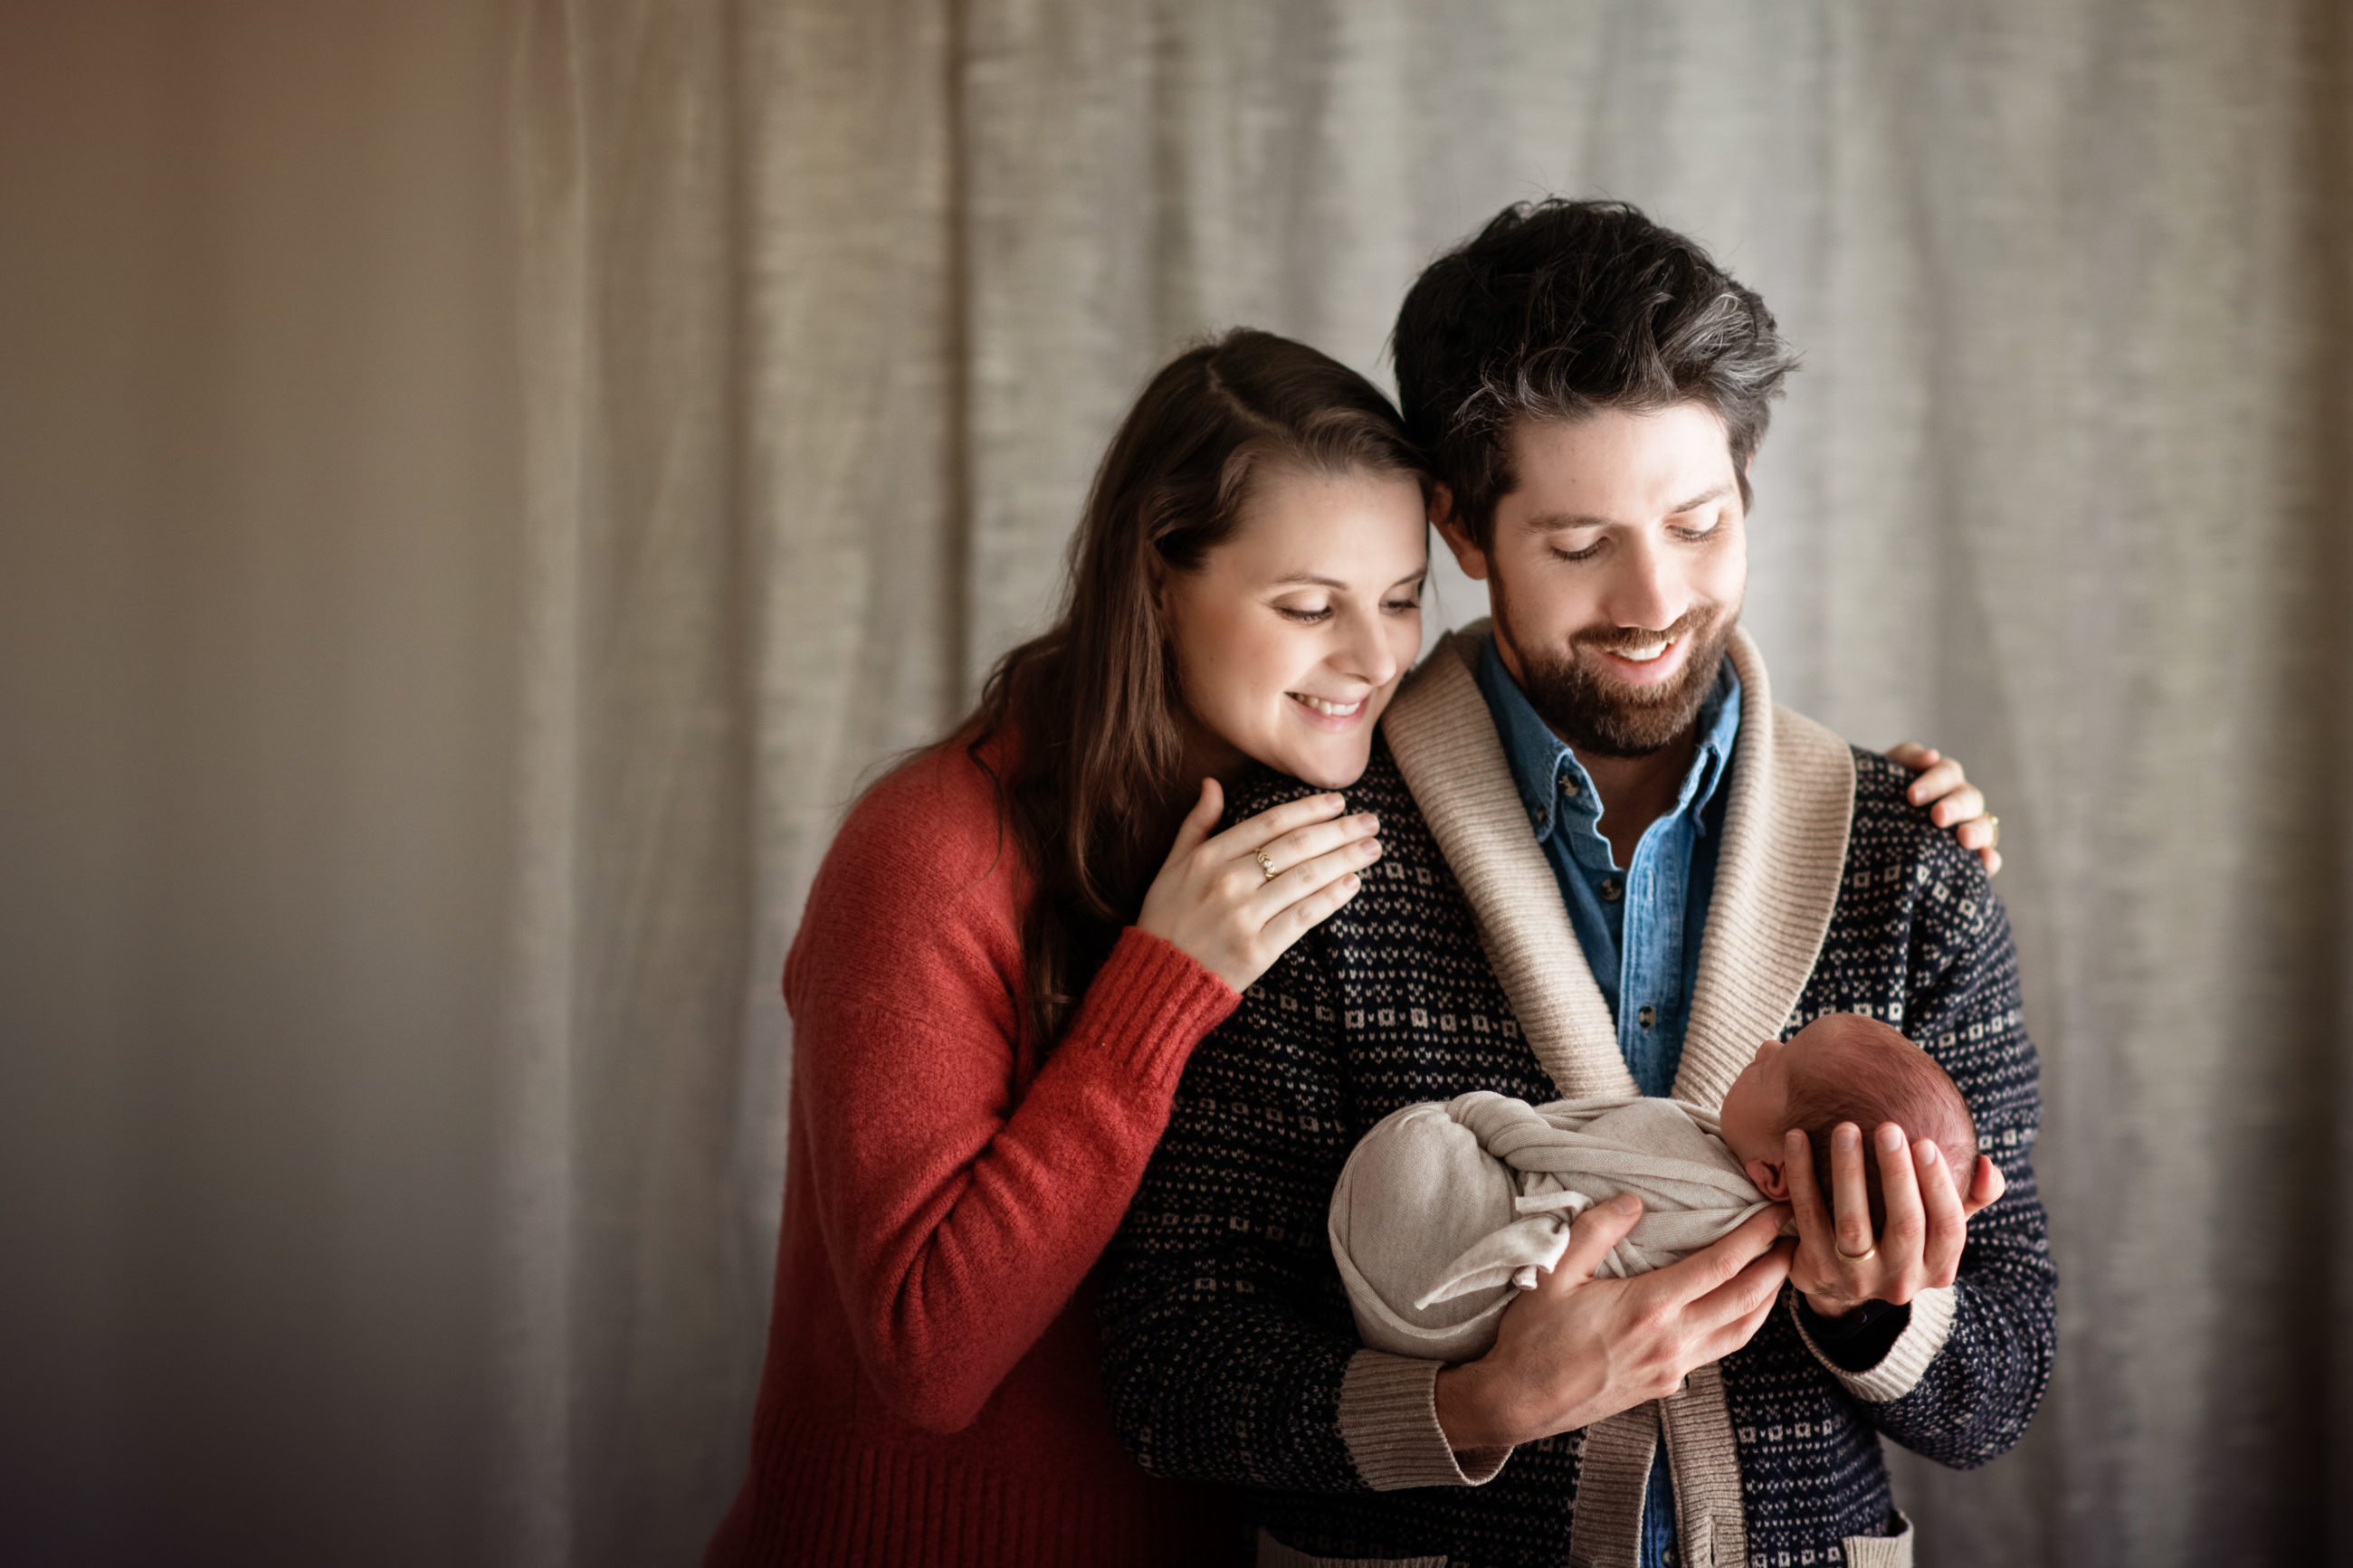 mom and dad holding newborn baby boy - boulder's best photographer